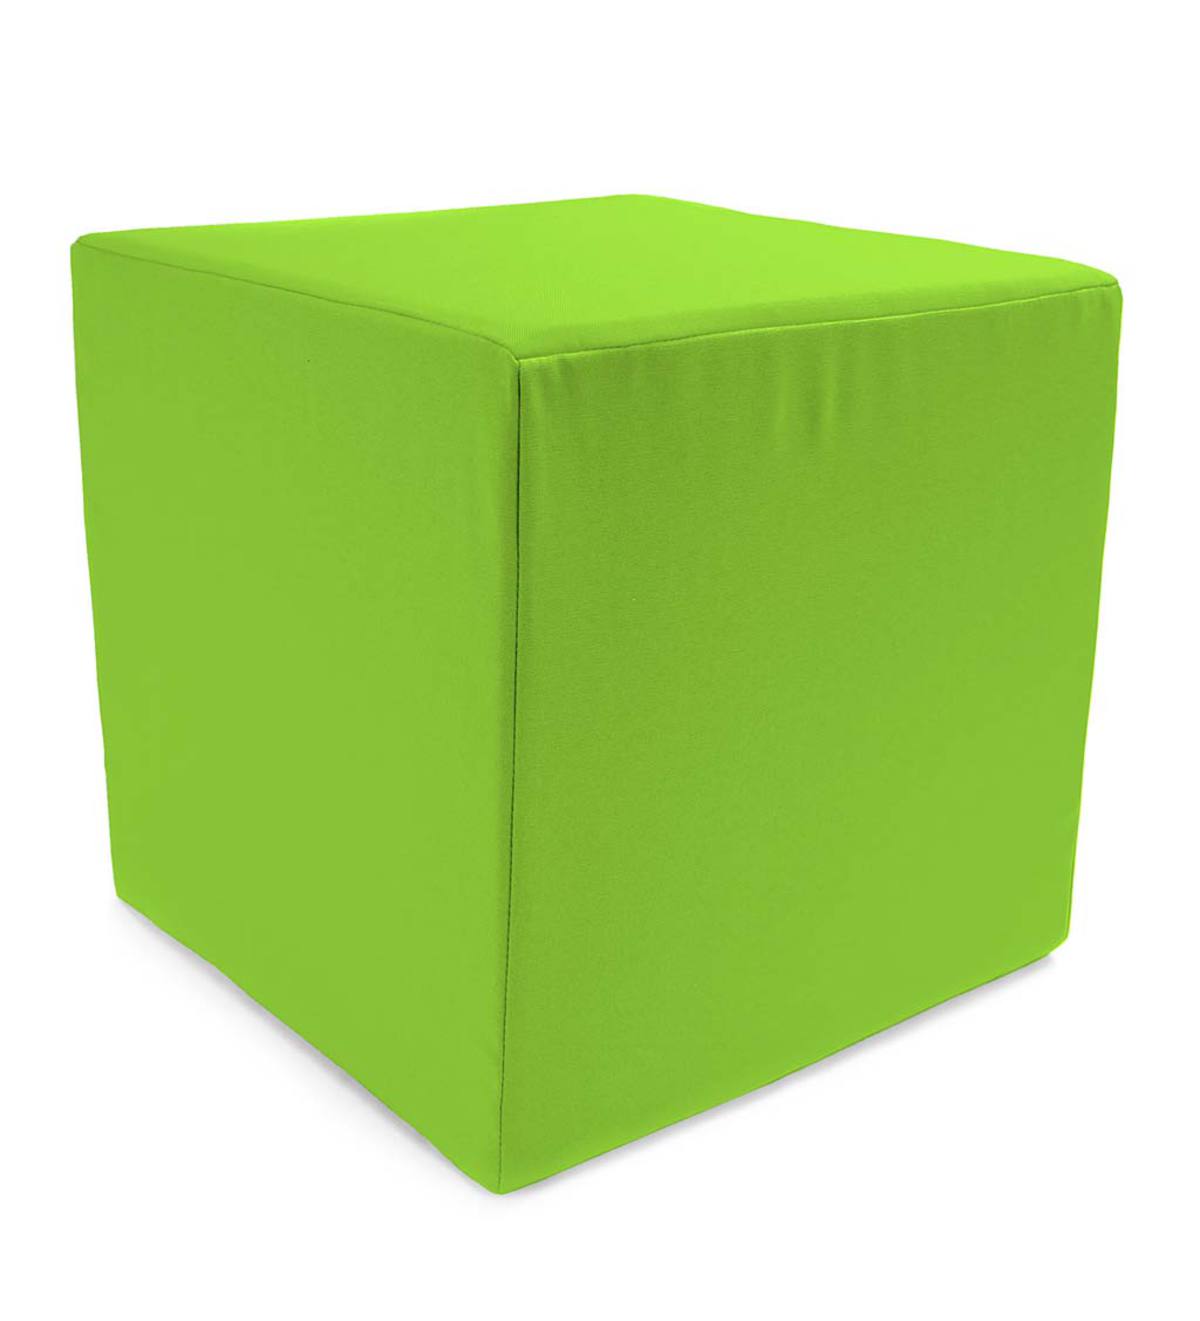 Polyester Classic Cube Ottoman, 15"x 15"